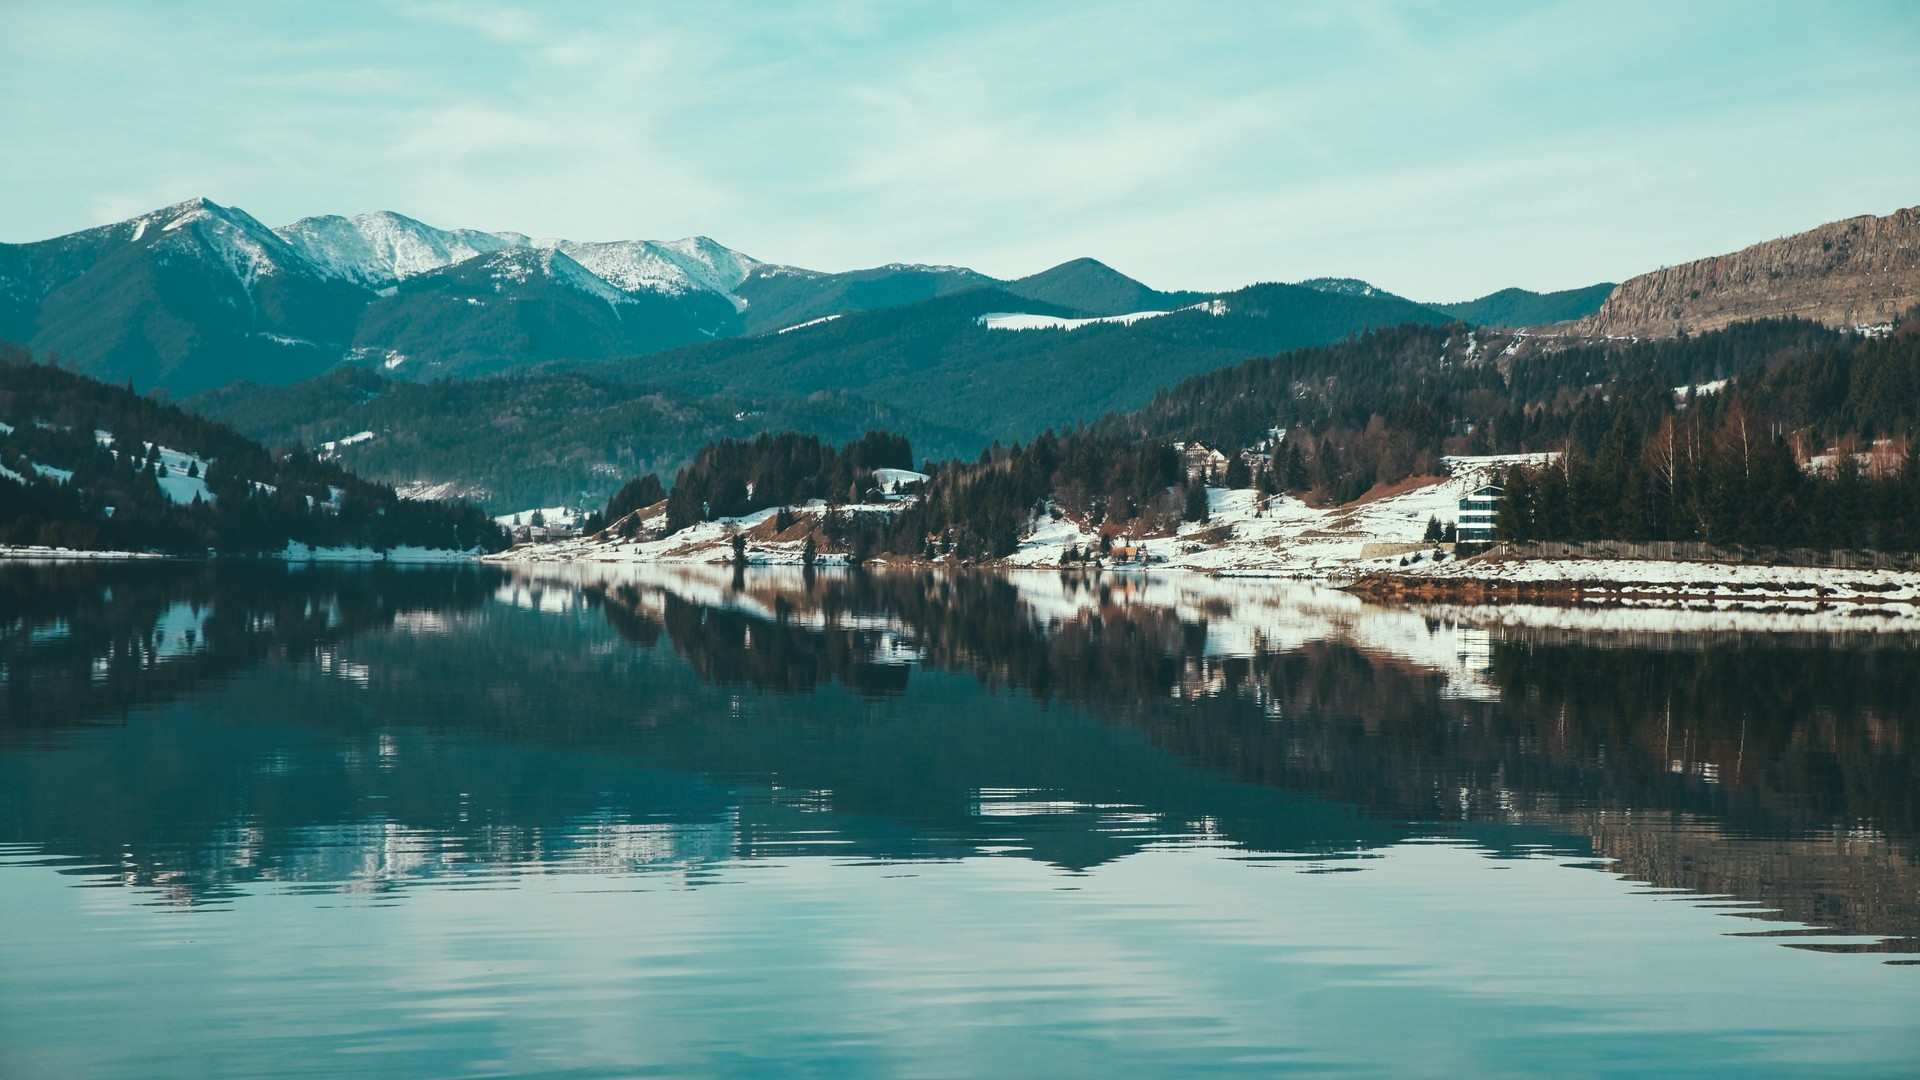 1920x1080 wallpapers: lake, mountains, snowy, romania (image)